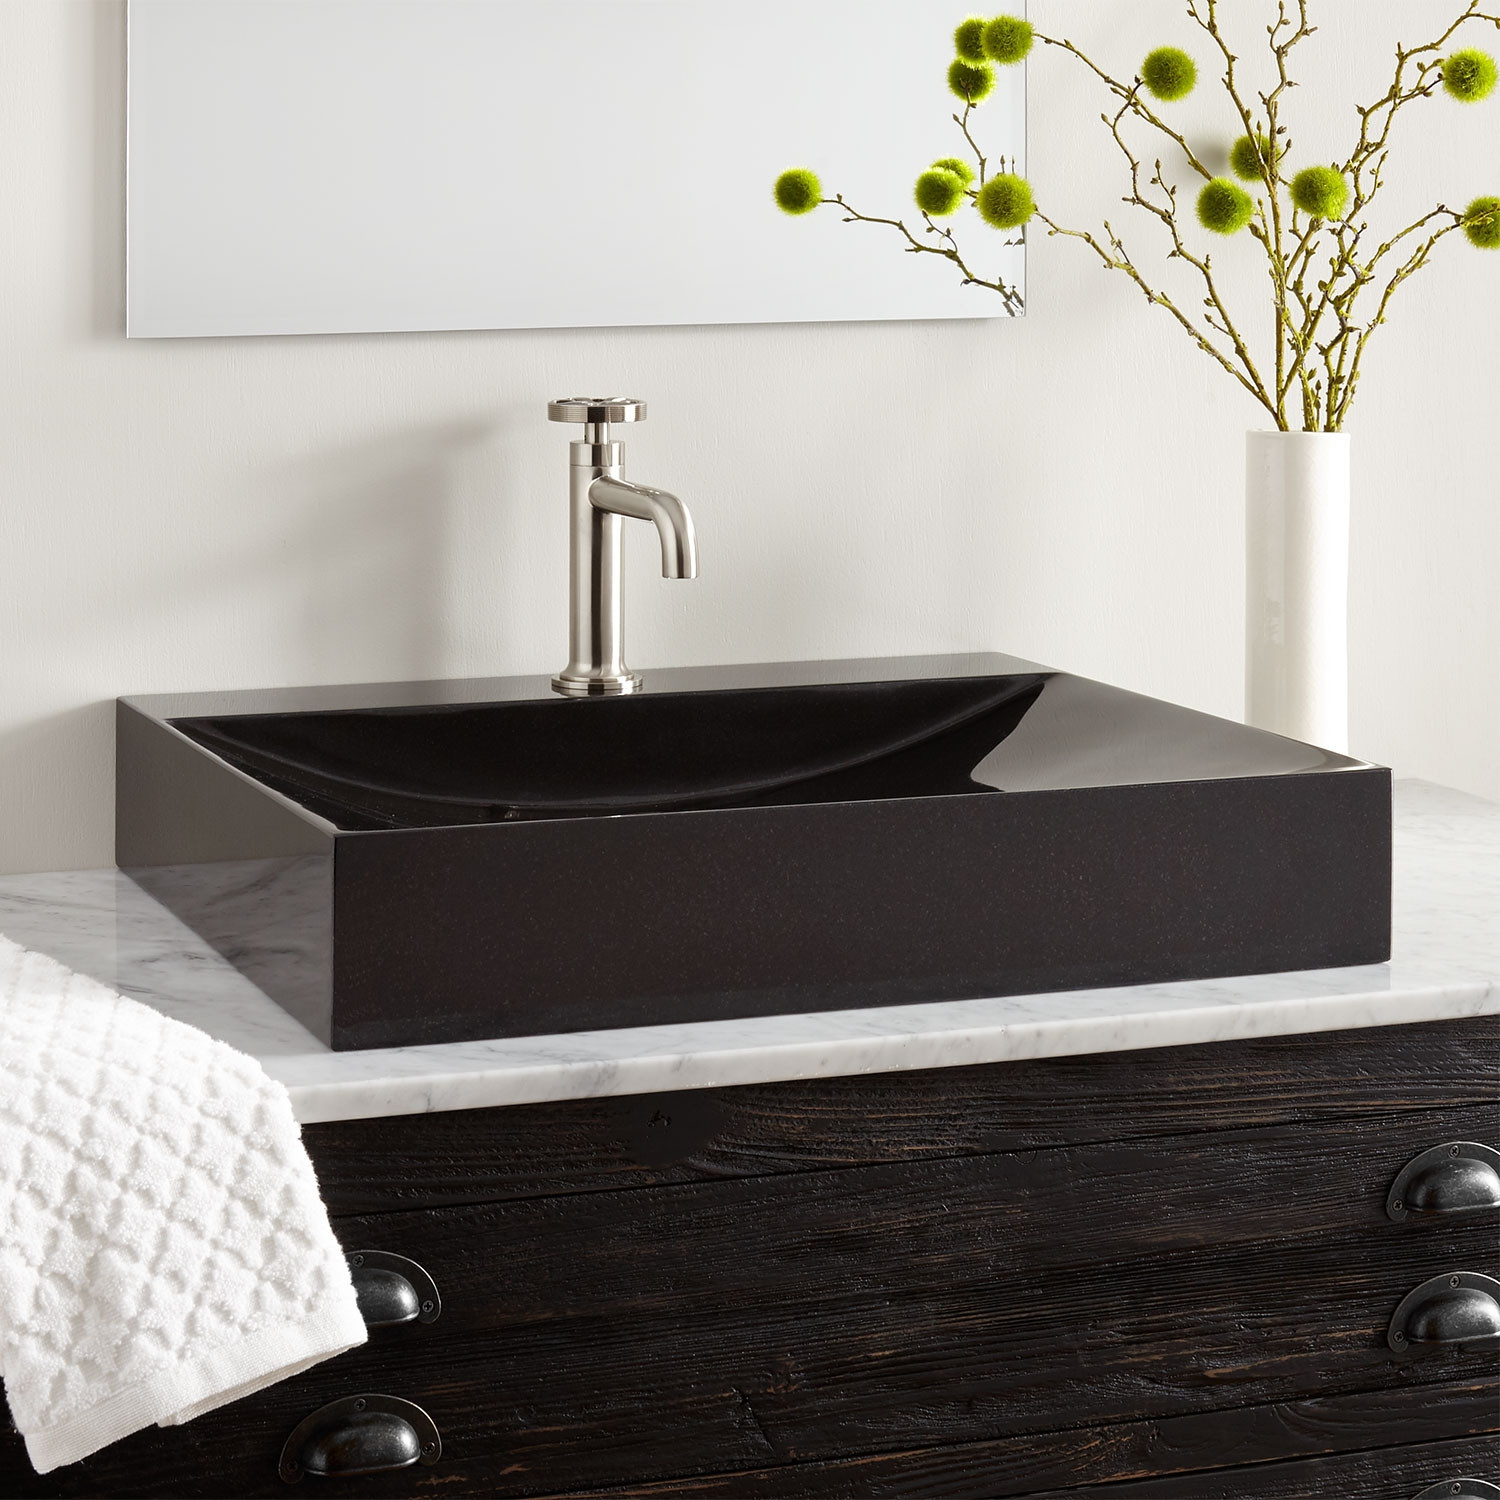 Marble Bathroom Sink Countertop
 Rectangular Black Granite Vessel Sink with Polished